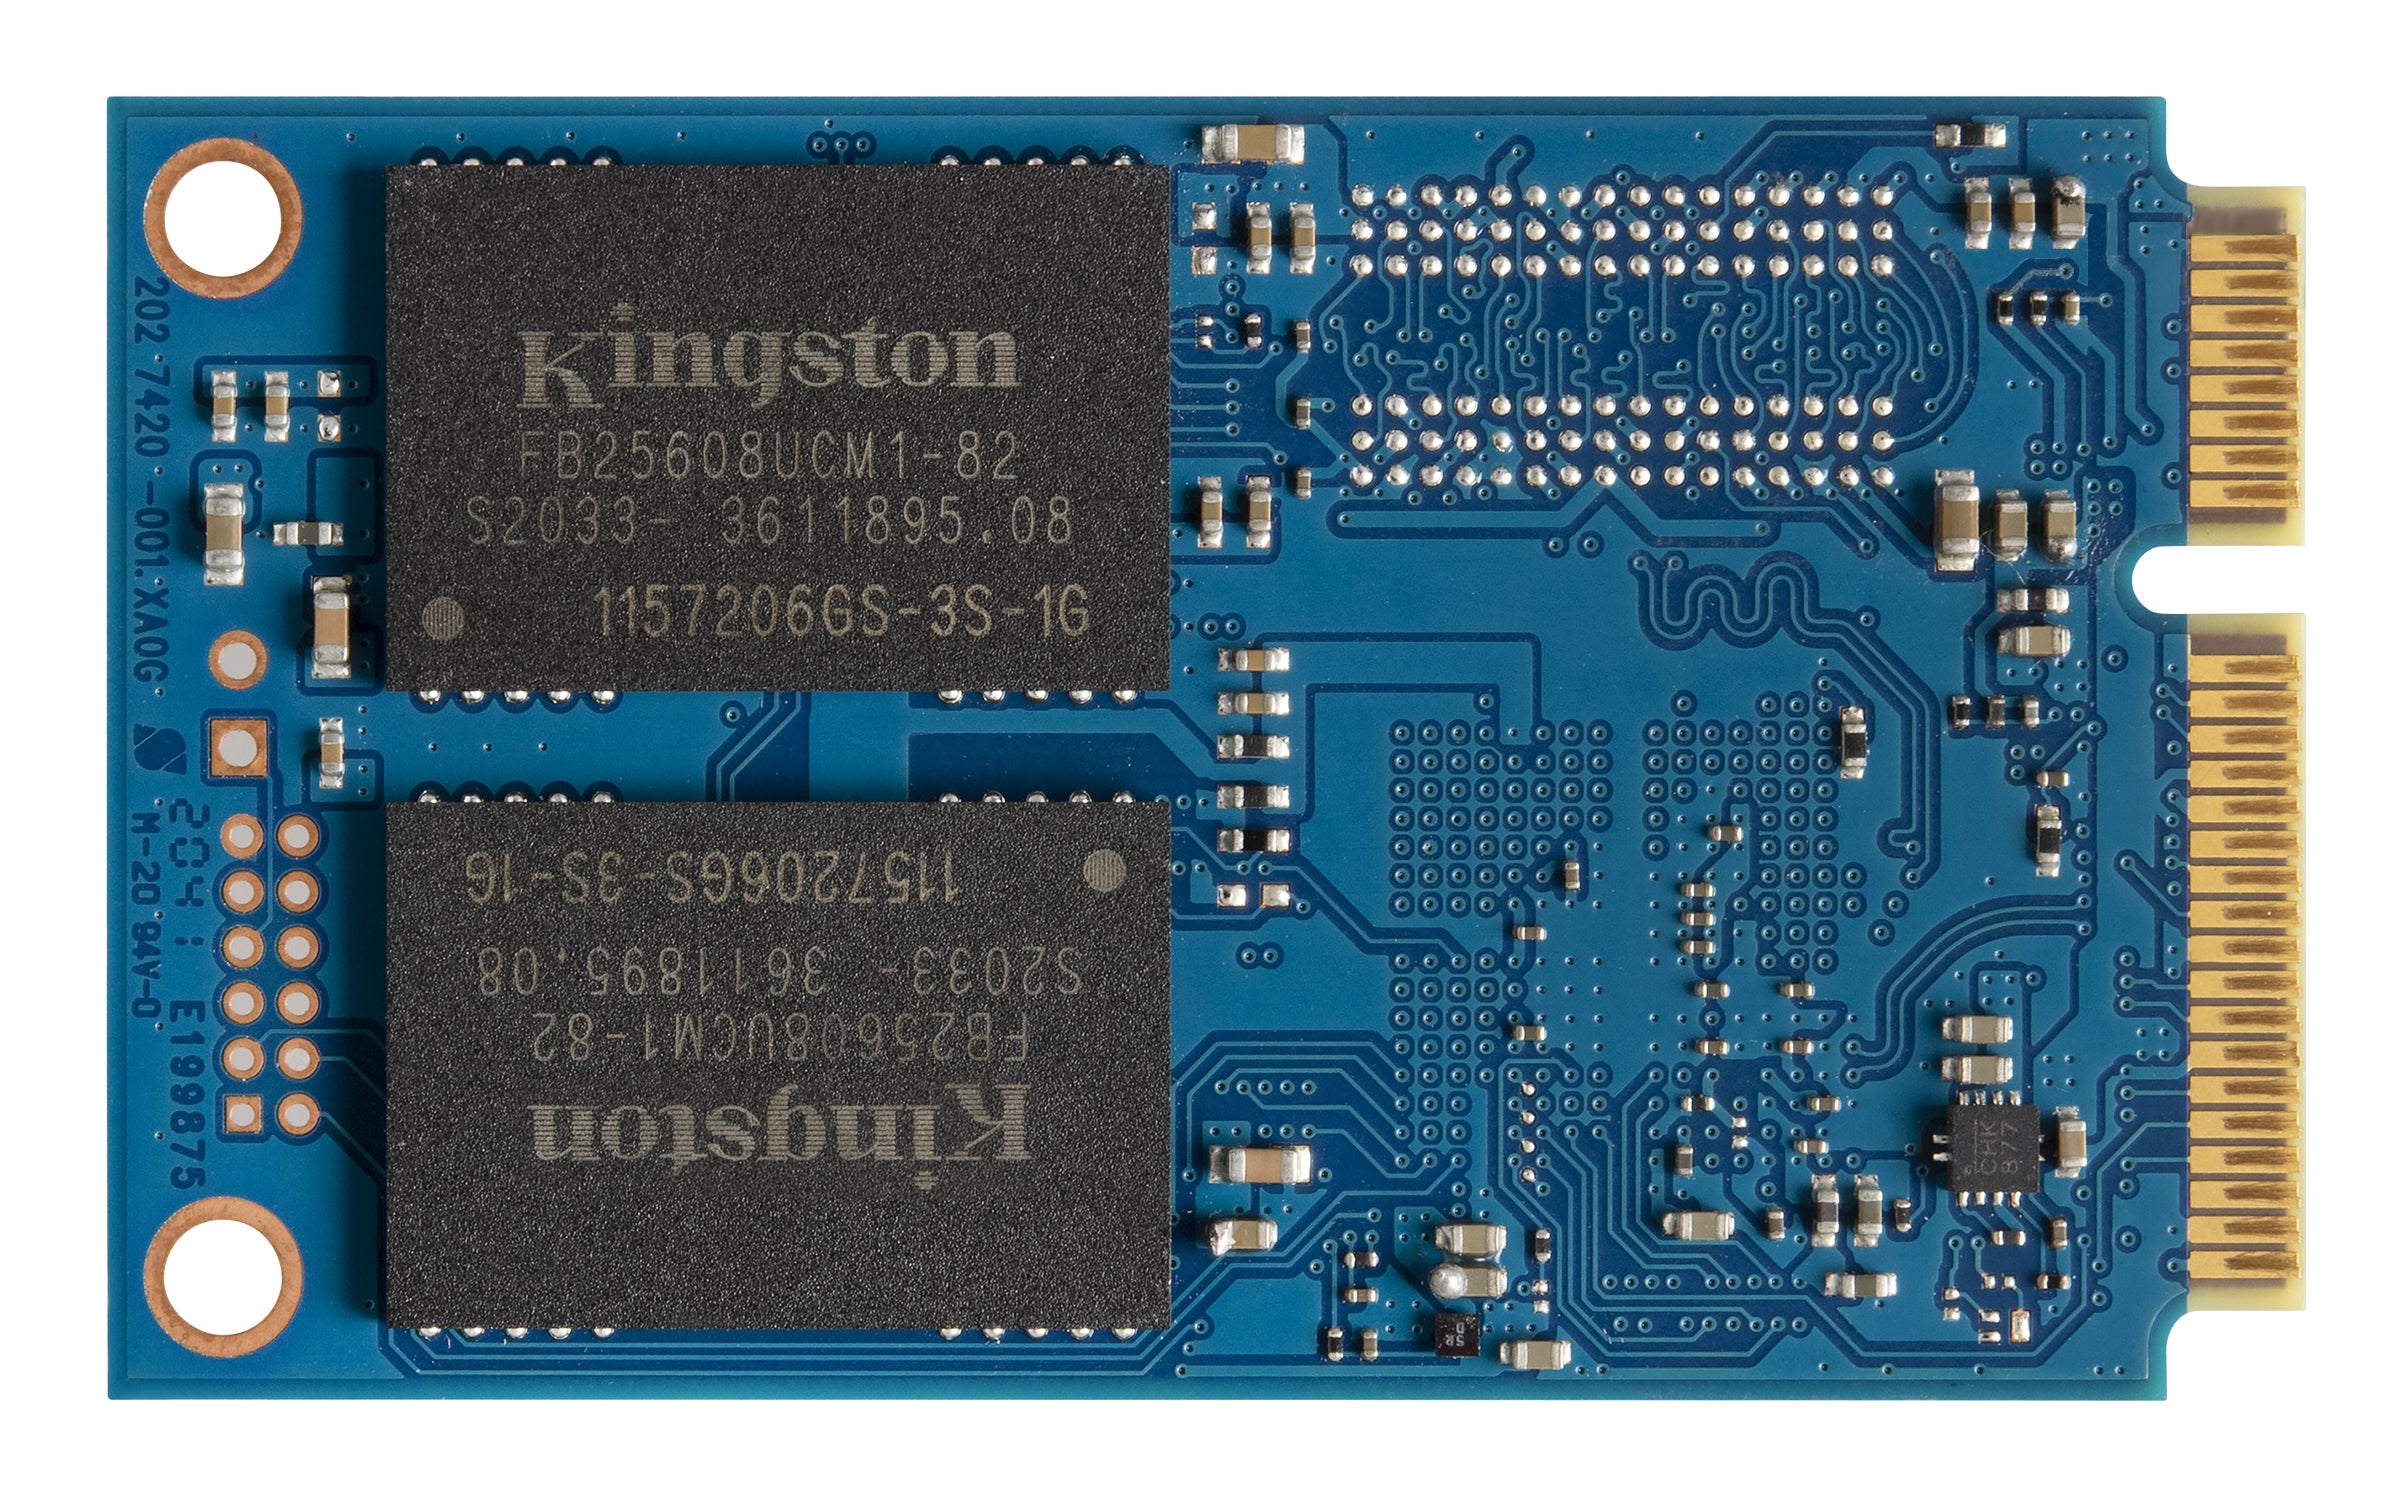 Unidad Ssd Kingston Skc600 Msata 512Gb Sata 3 550R/520W(Skc600Ms/512G)